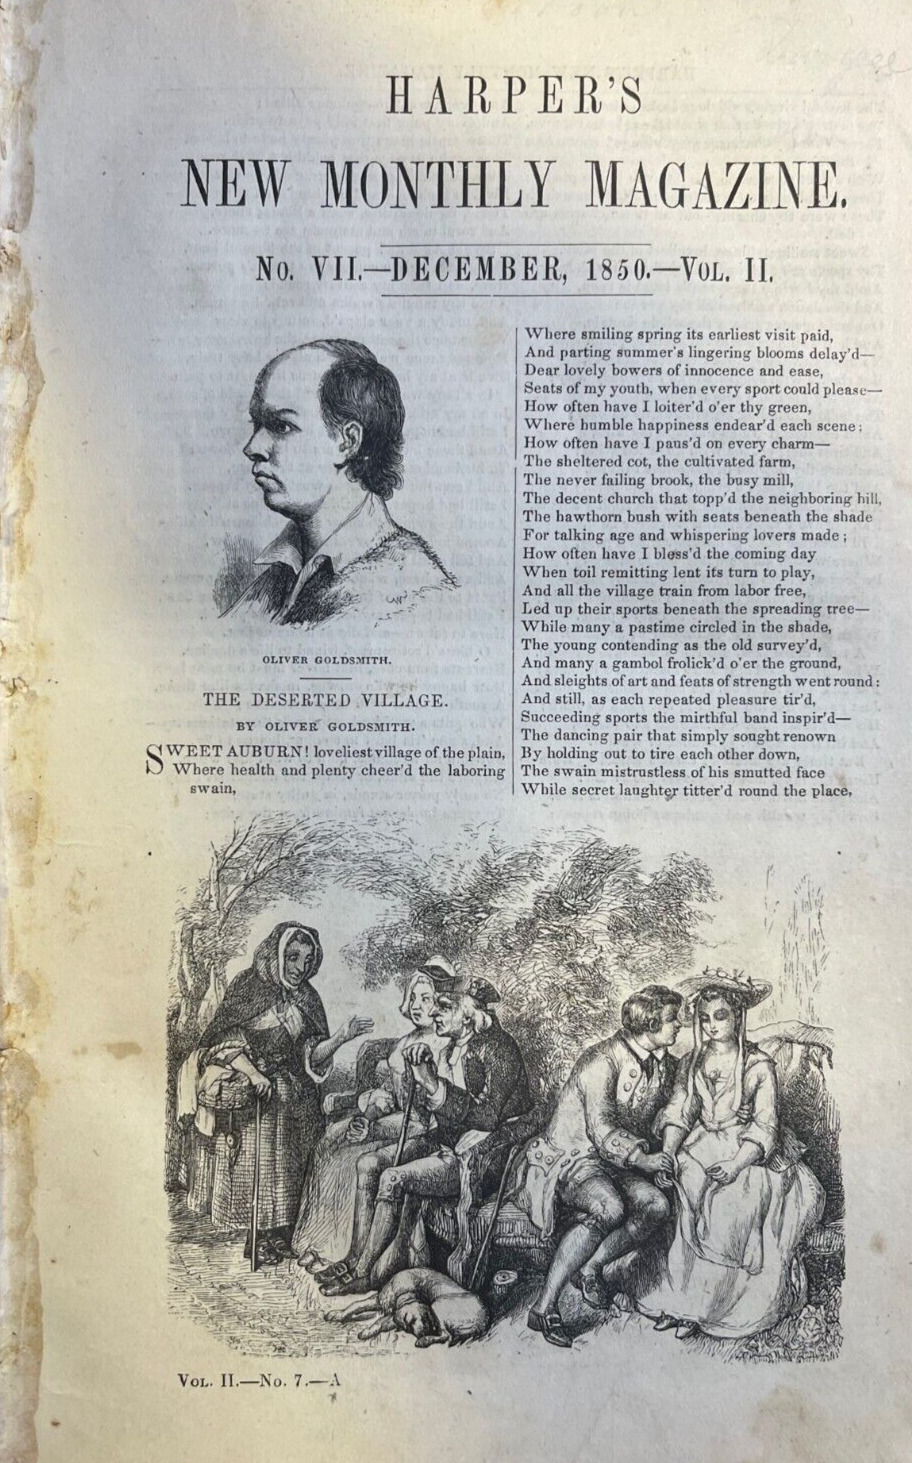 1851 Illustrated Poem The Deserted Village by Oliver Goldsmith